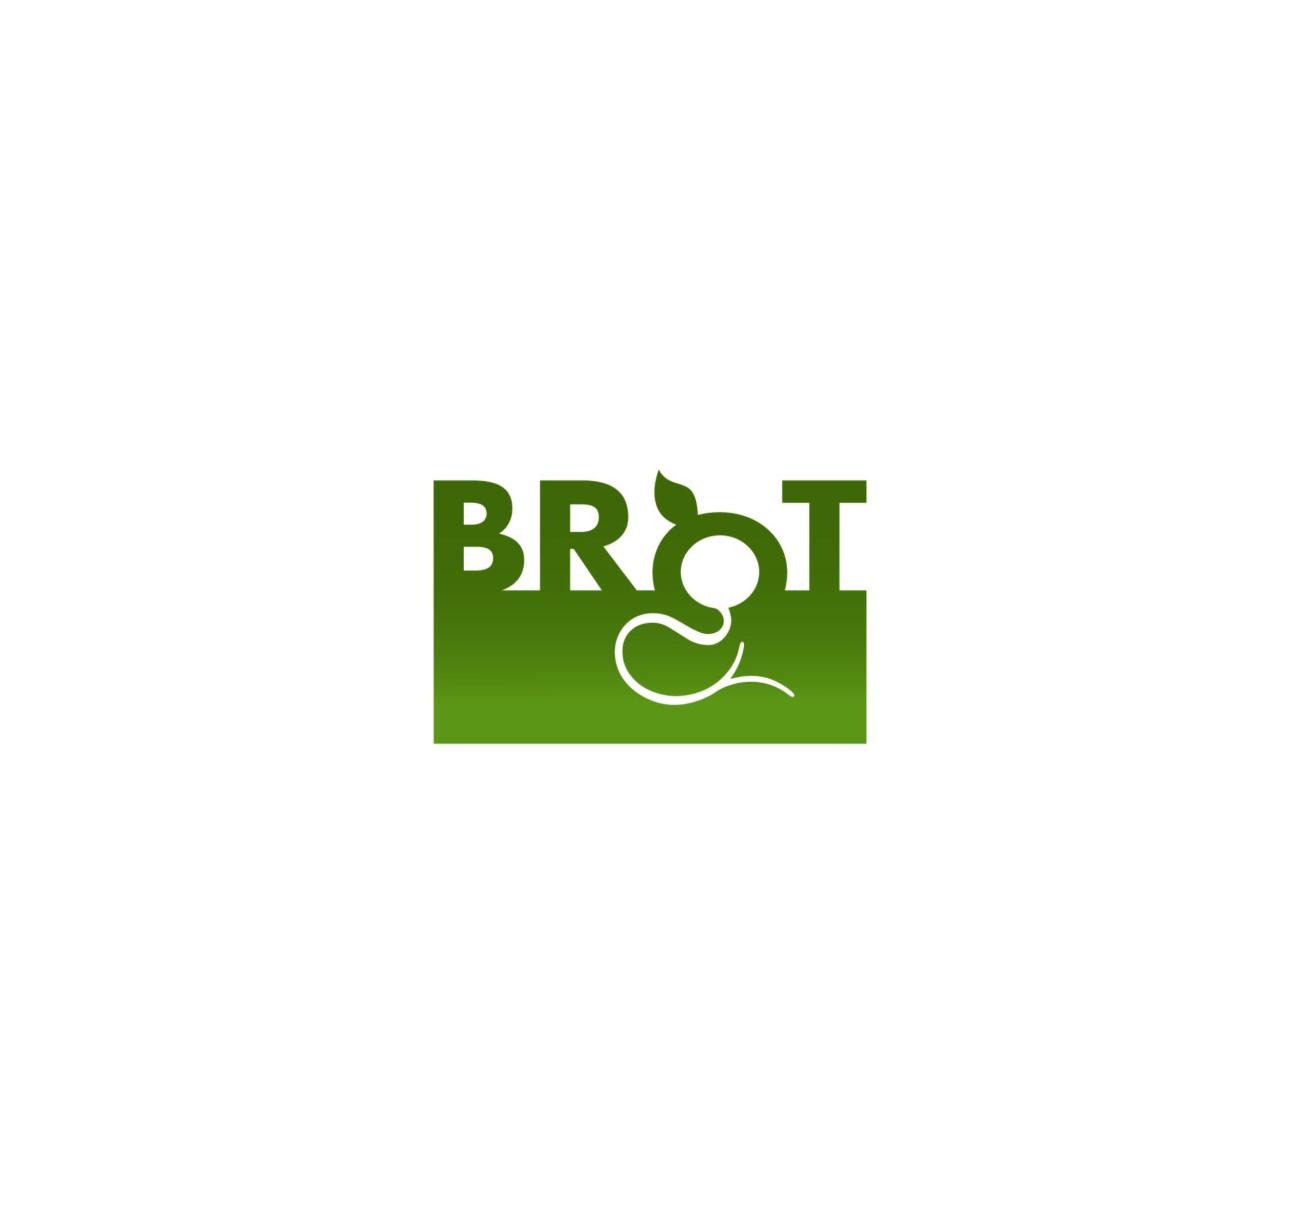 Logo Brot